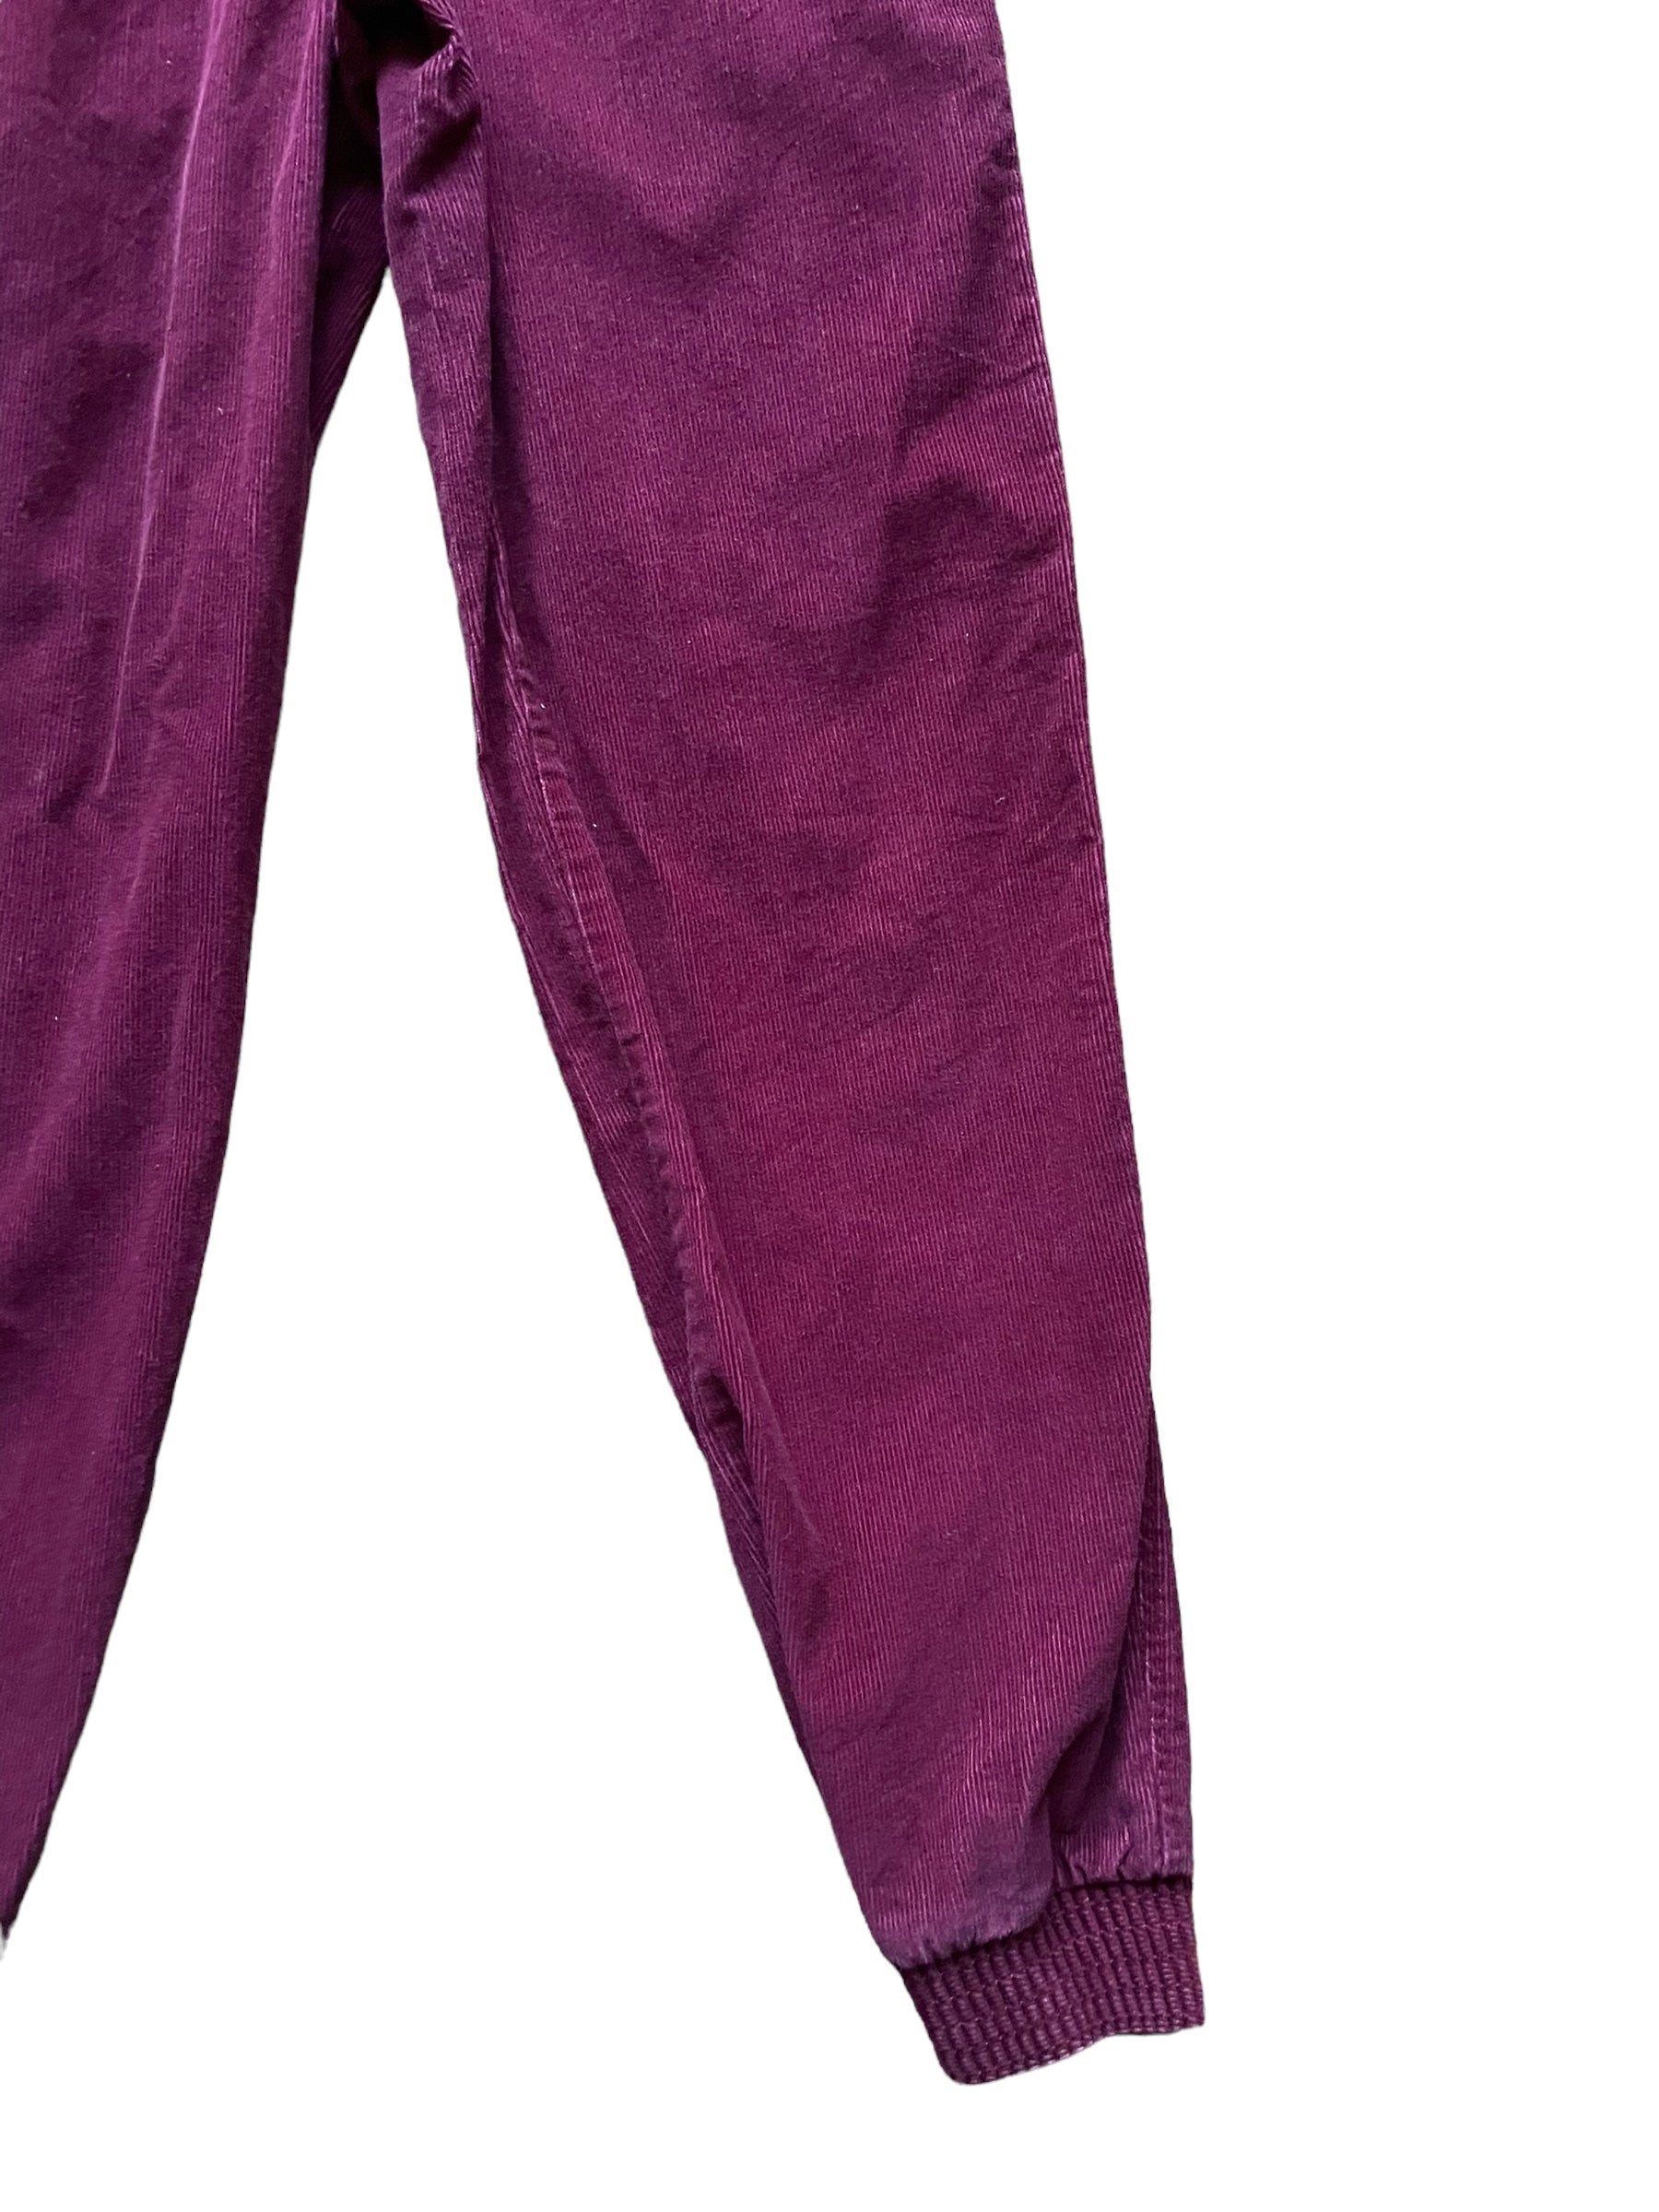 Back right leg of Vintage 1970s Calvin Klein Corduroy Pants W26 | Barn Owl Vintage Seattle | Vintage Corduroy Pants